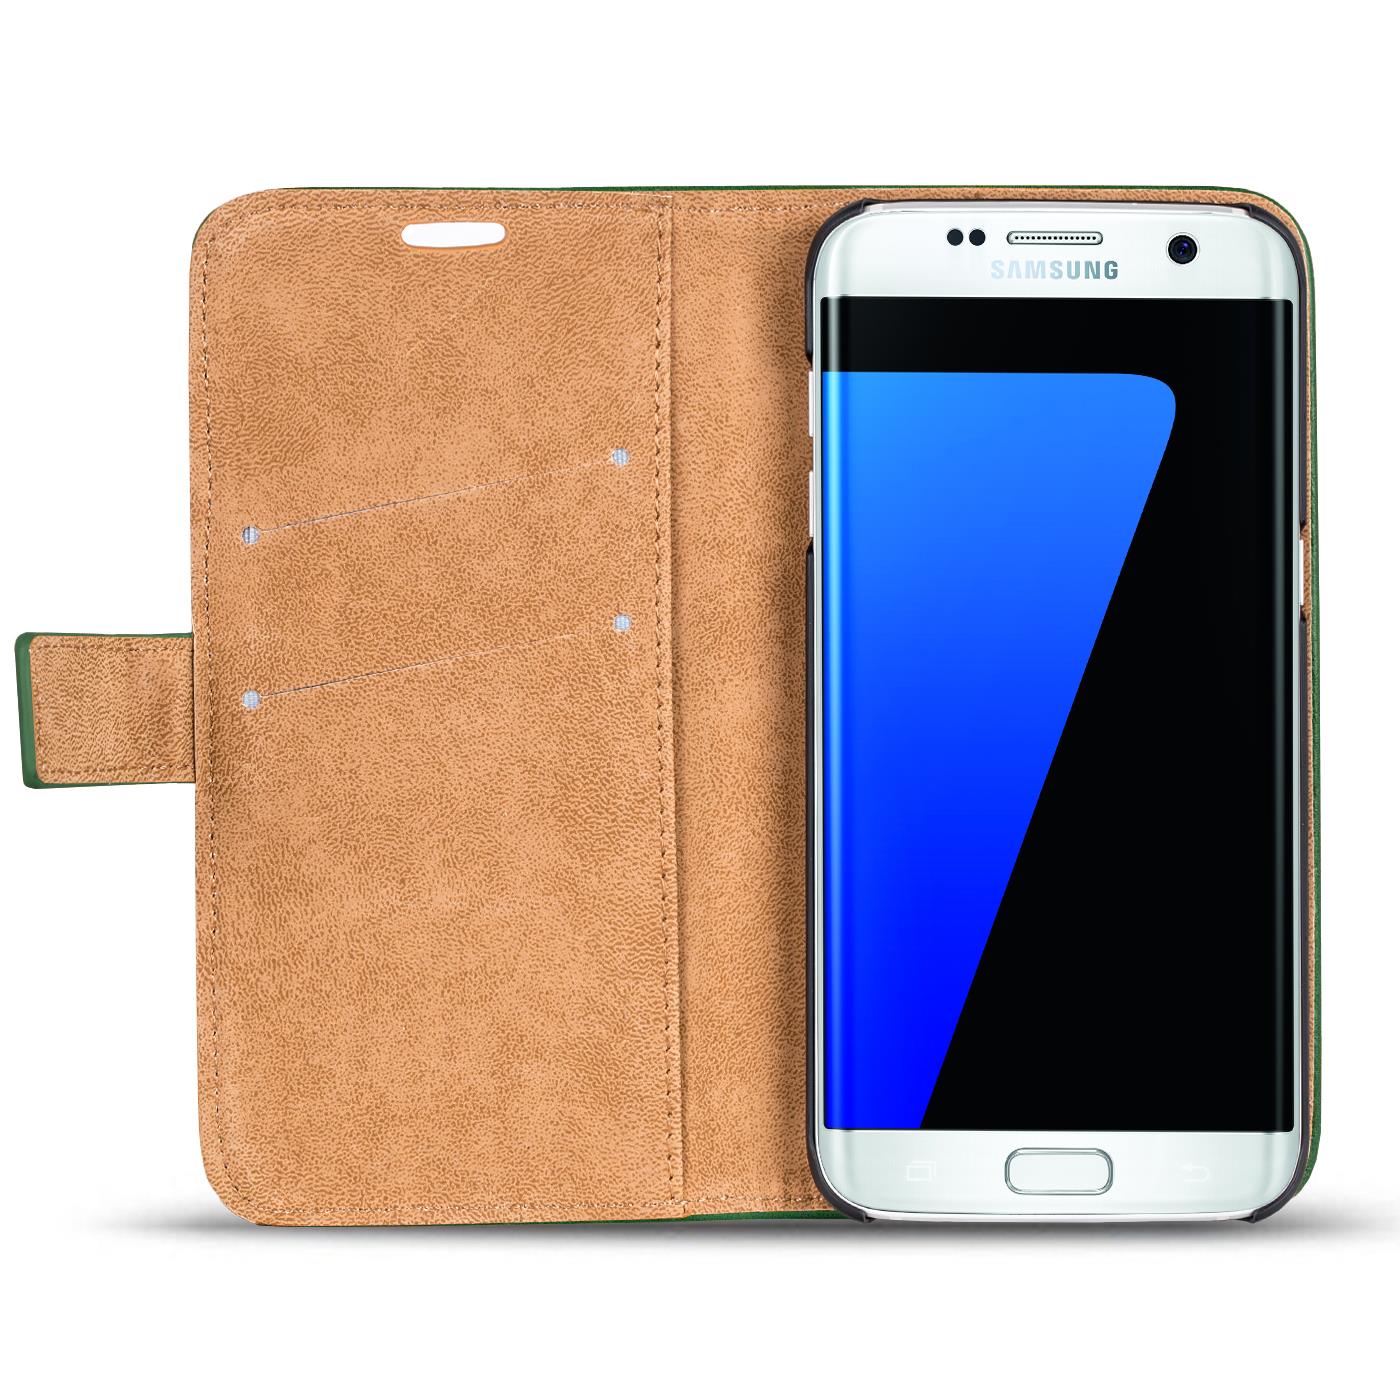 Samsung Galaxy S7 Edge Shockproof Wallet Book Case Cover PU Leather Flip Holder eBay